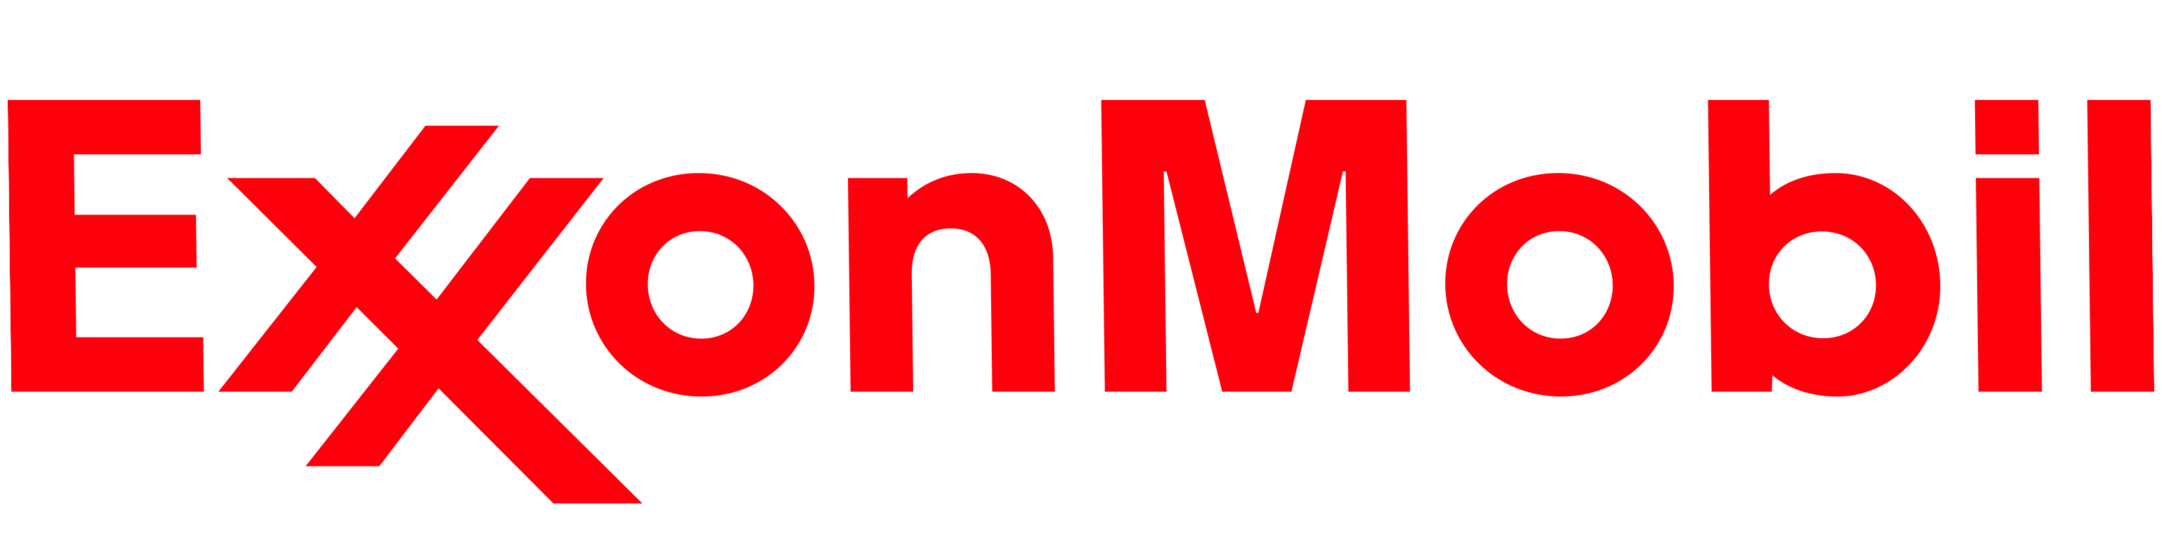 ExxonMobil+logo+lg.png